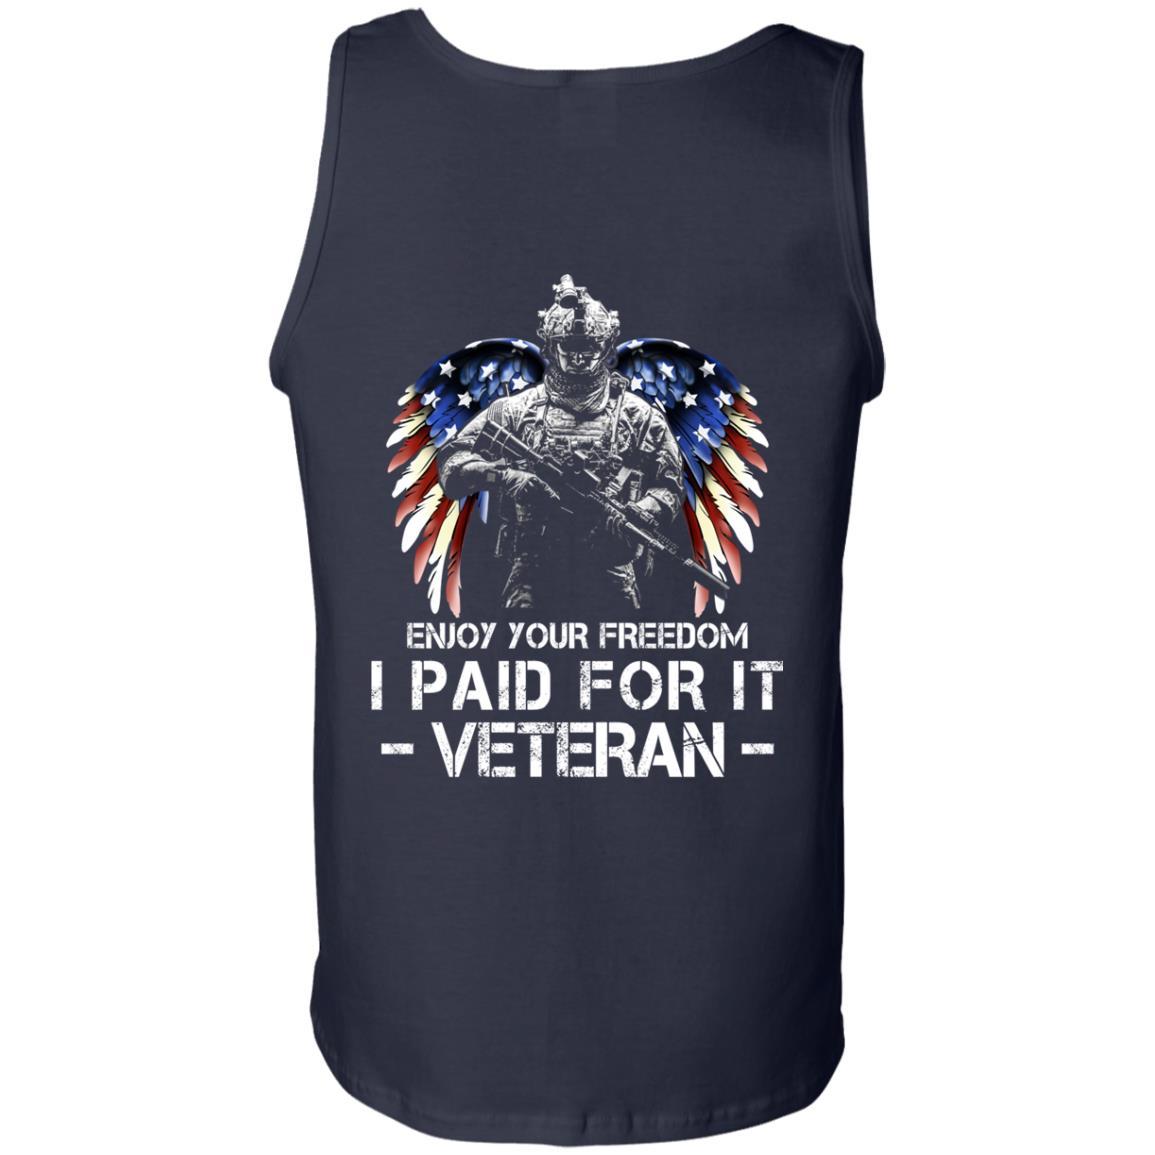 Military T-Shirt "Enjoy Your Freedom - I Paid For It Veteran Men" On Back-TShirt-General-Veterans Nation